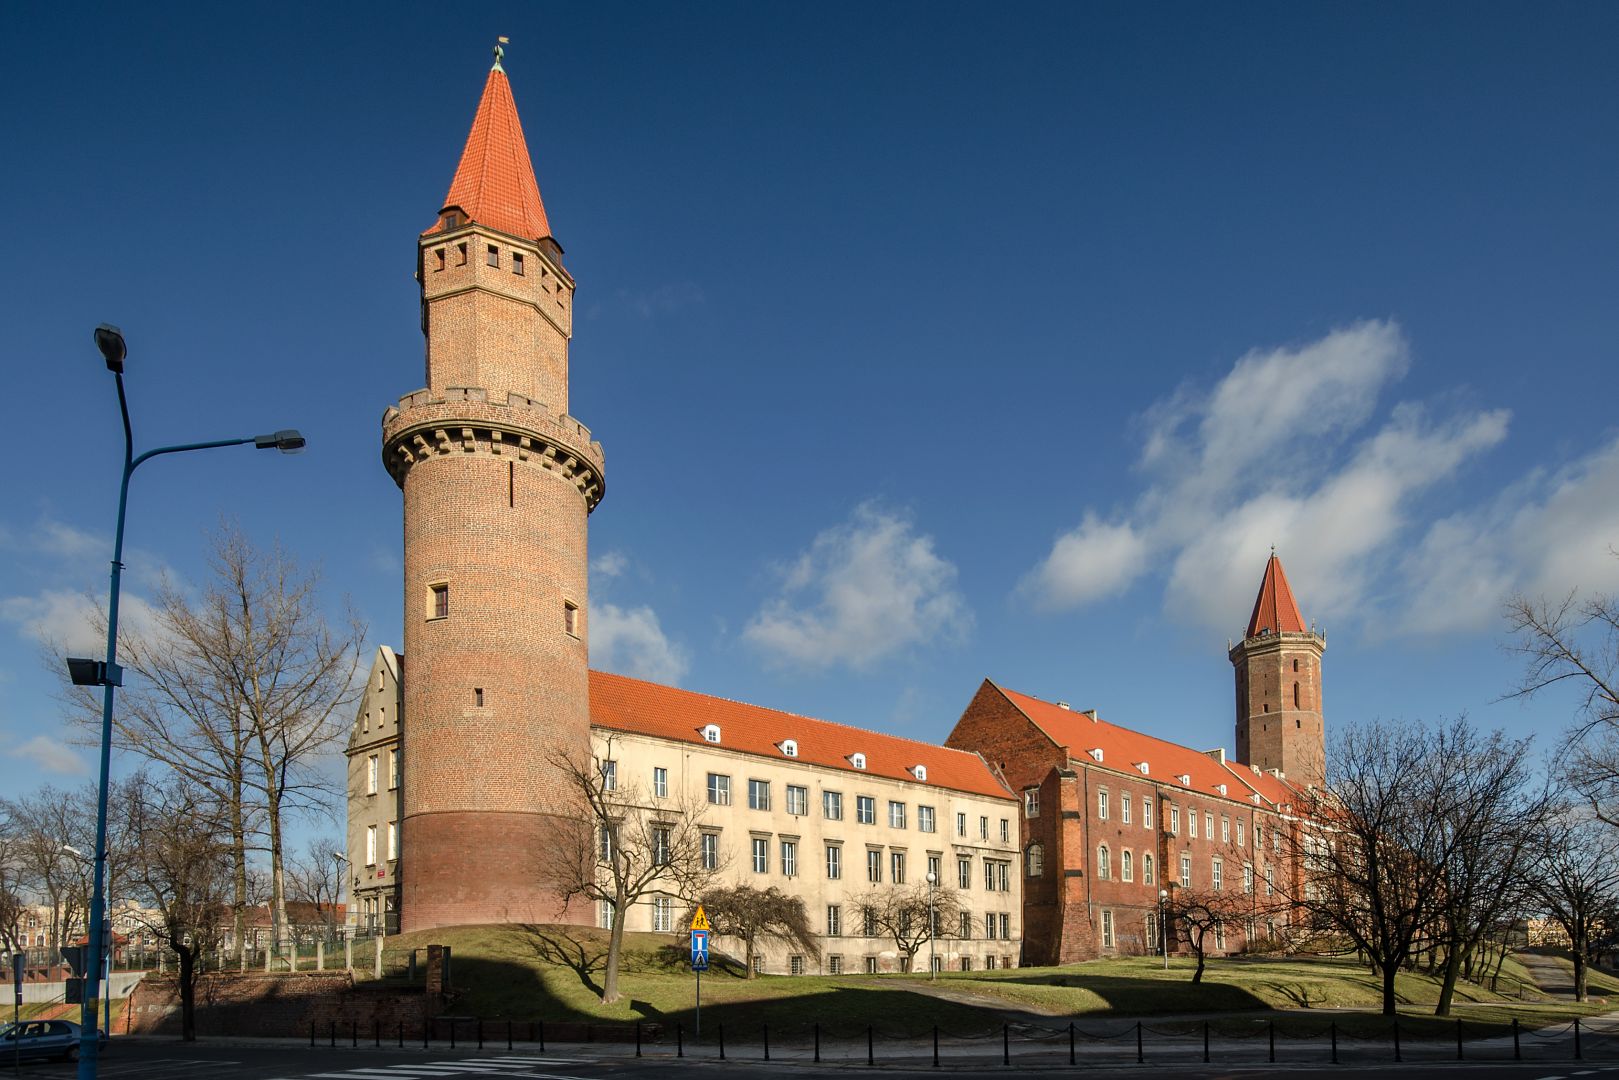 Powerful edifice of the Piast Castle in Legnica